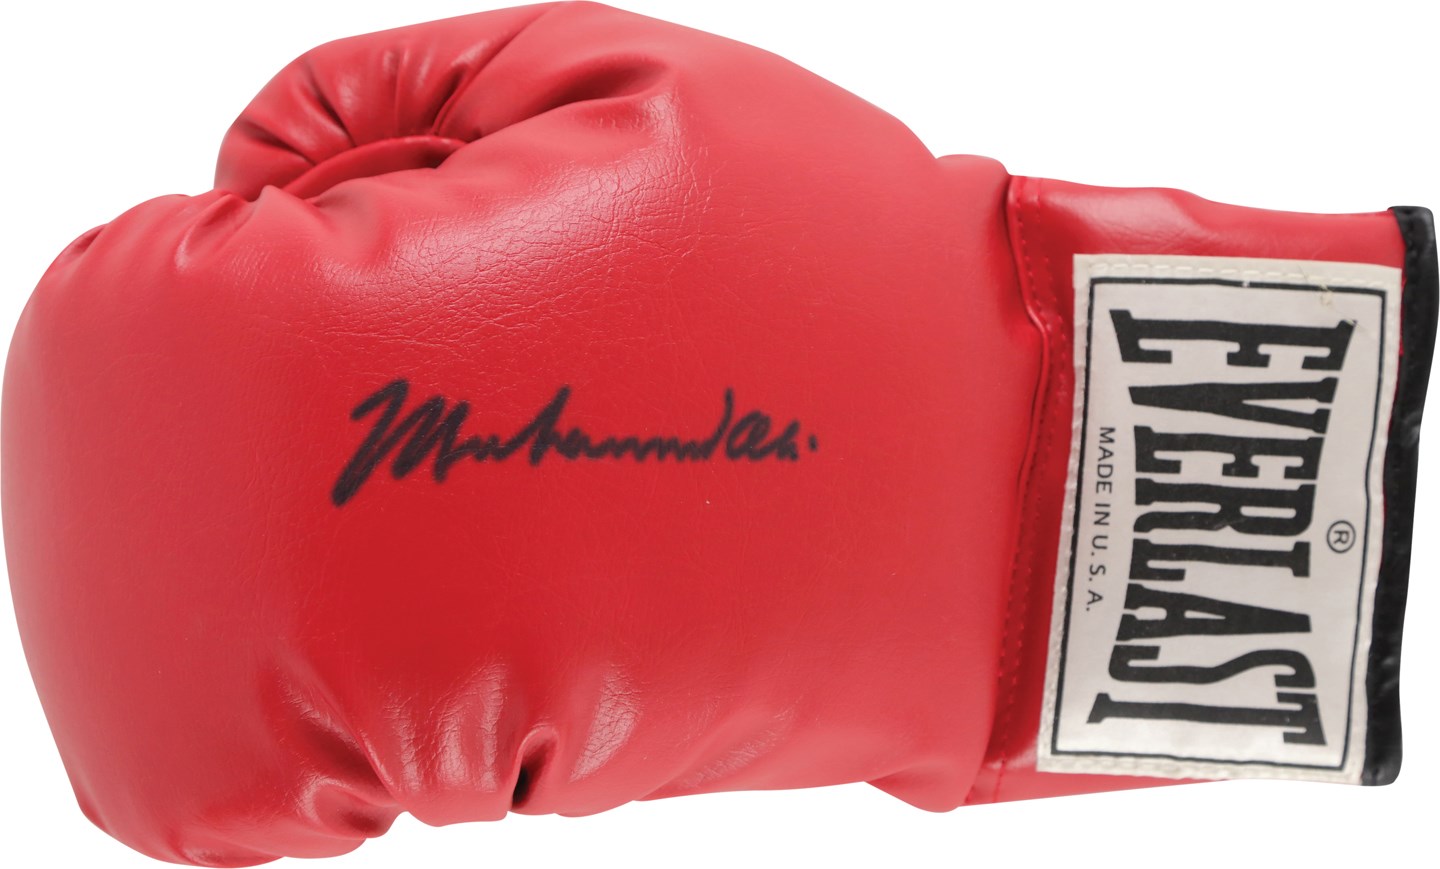 Muhammad Ali & Boxing - Muhammad Ali Single-Signed Boxing Glove (PSA)